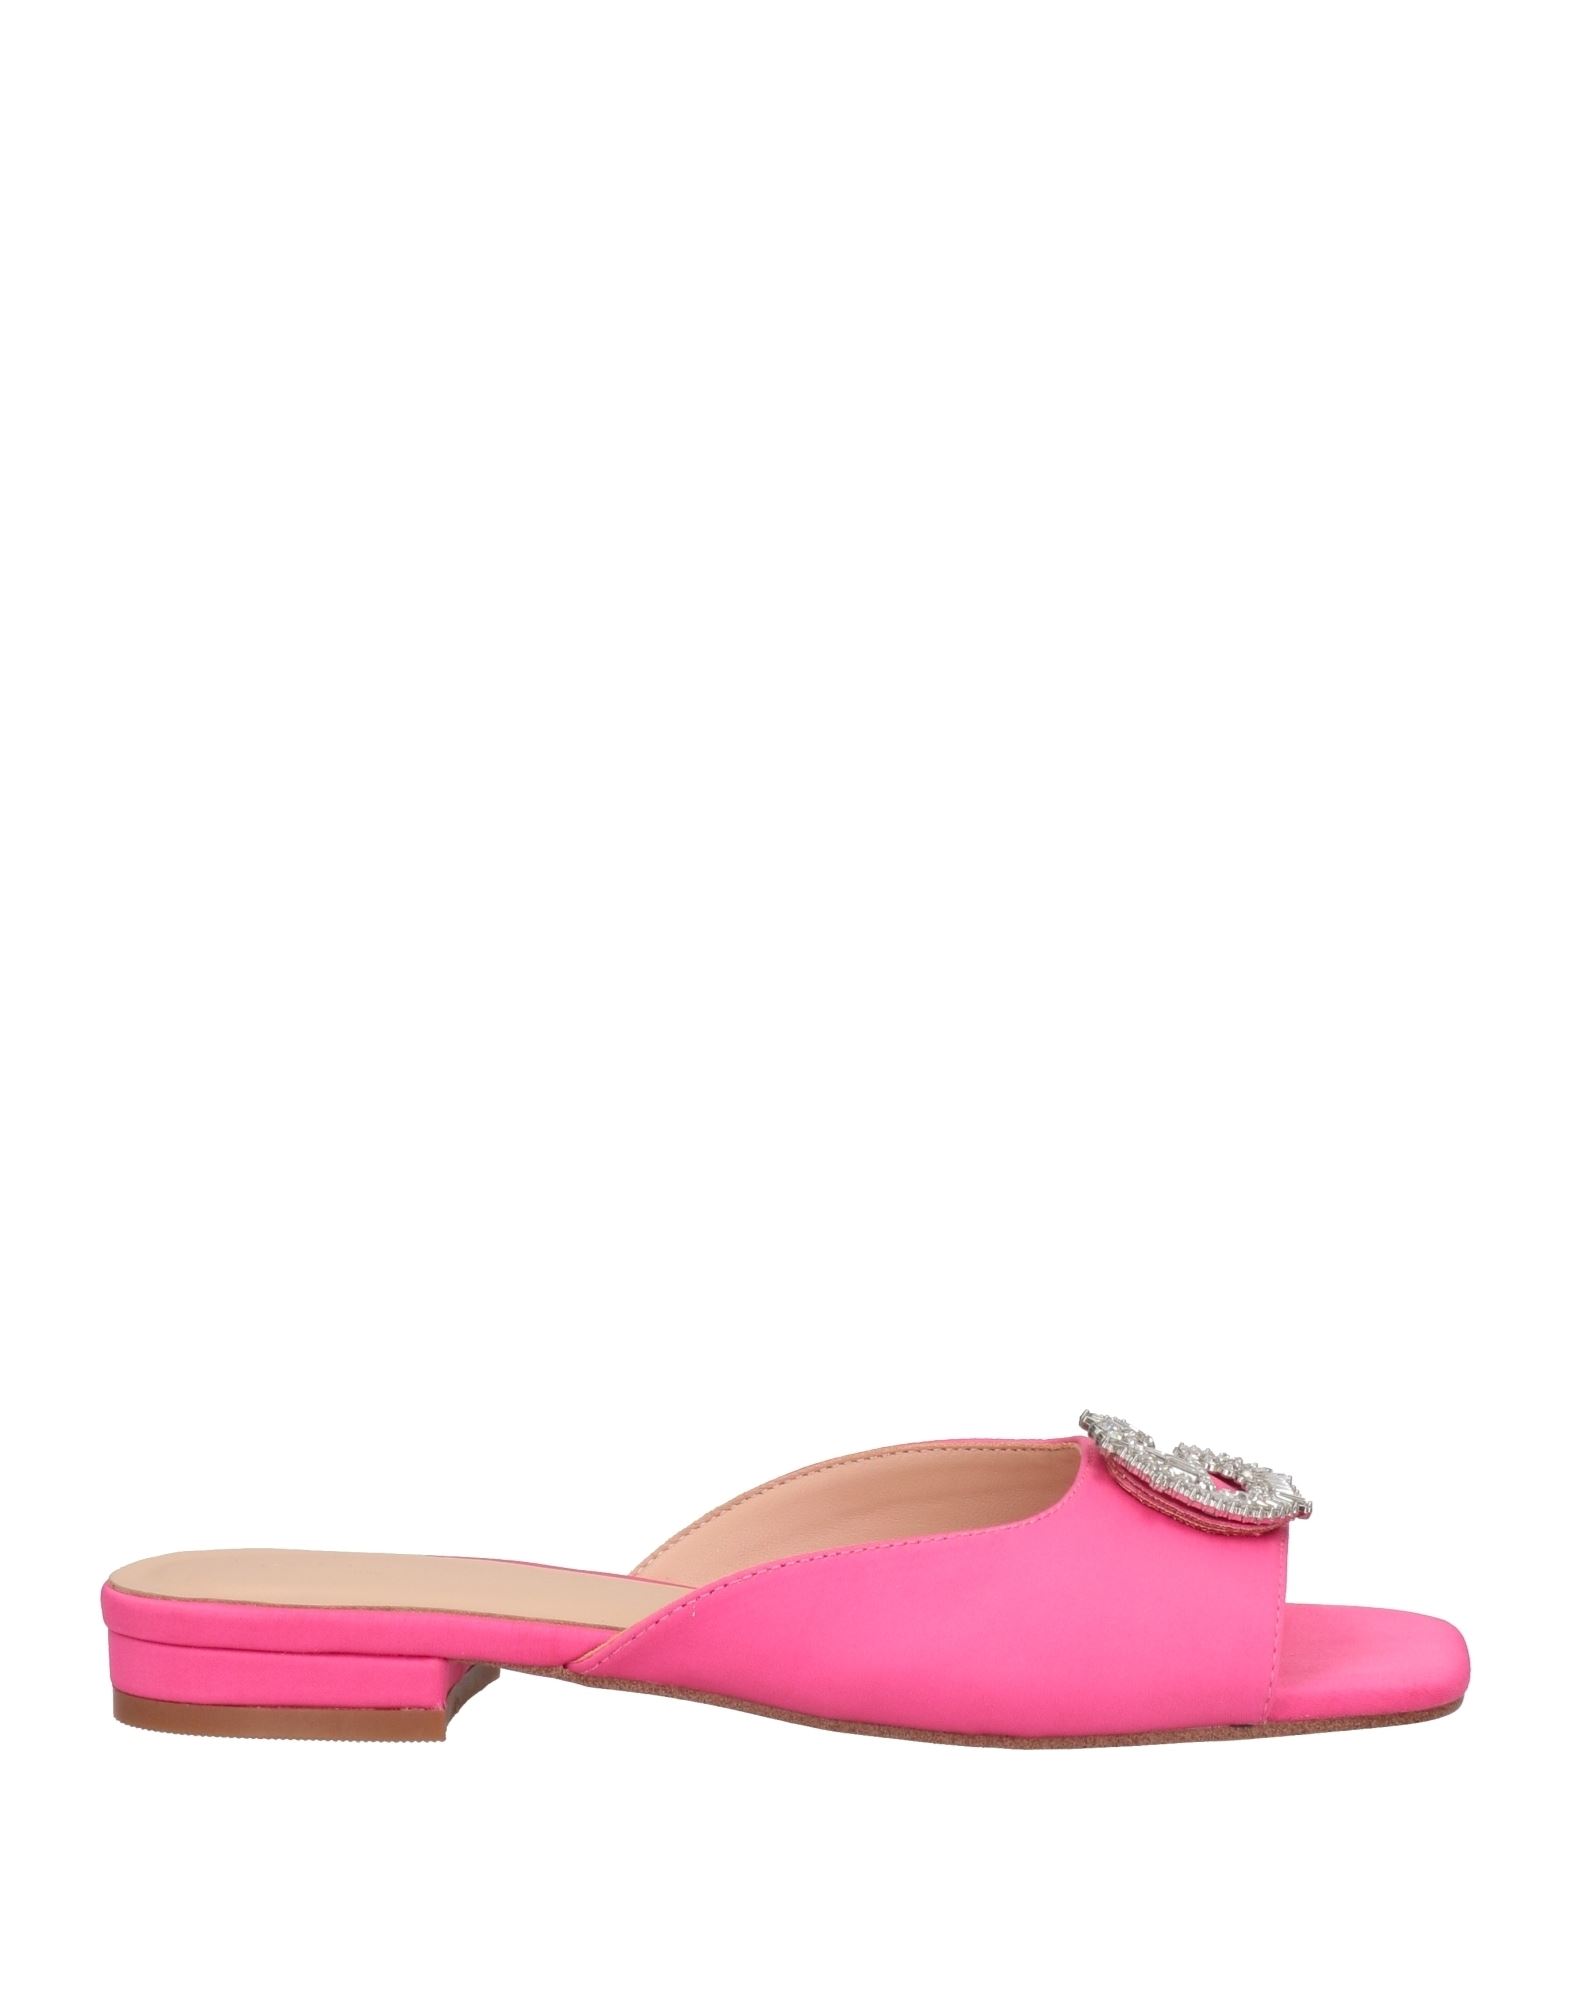 Gaelle Paris Sandals In Pink